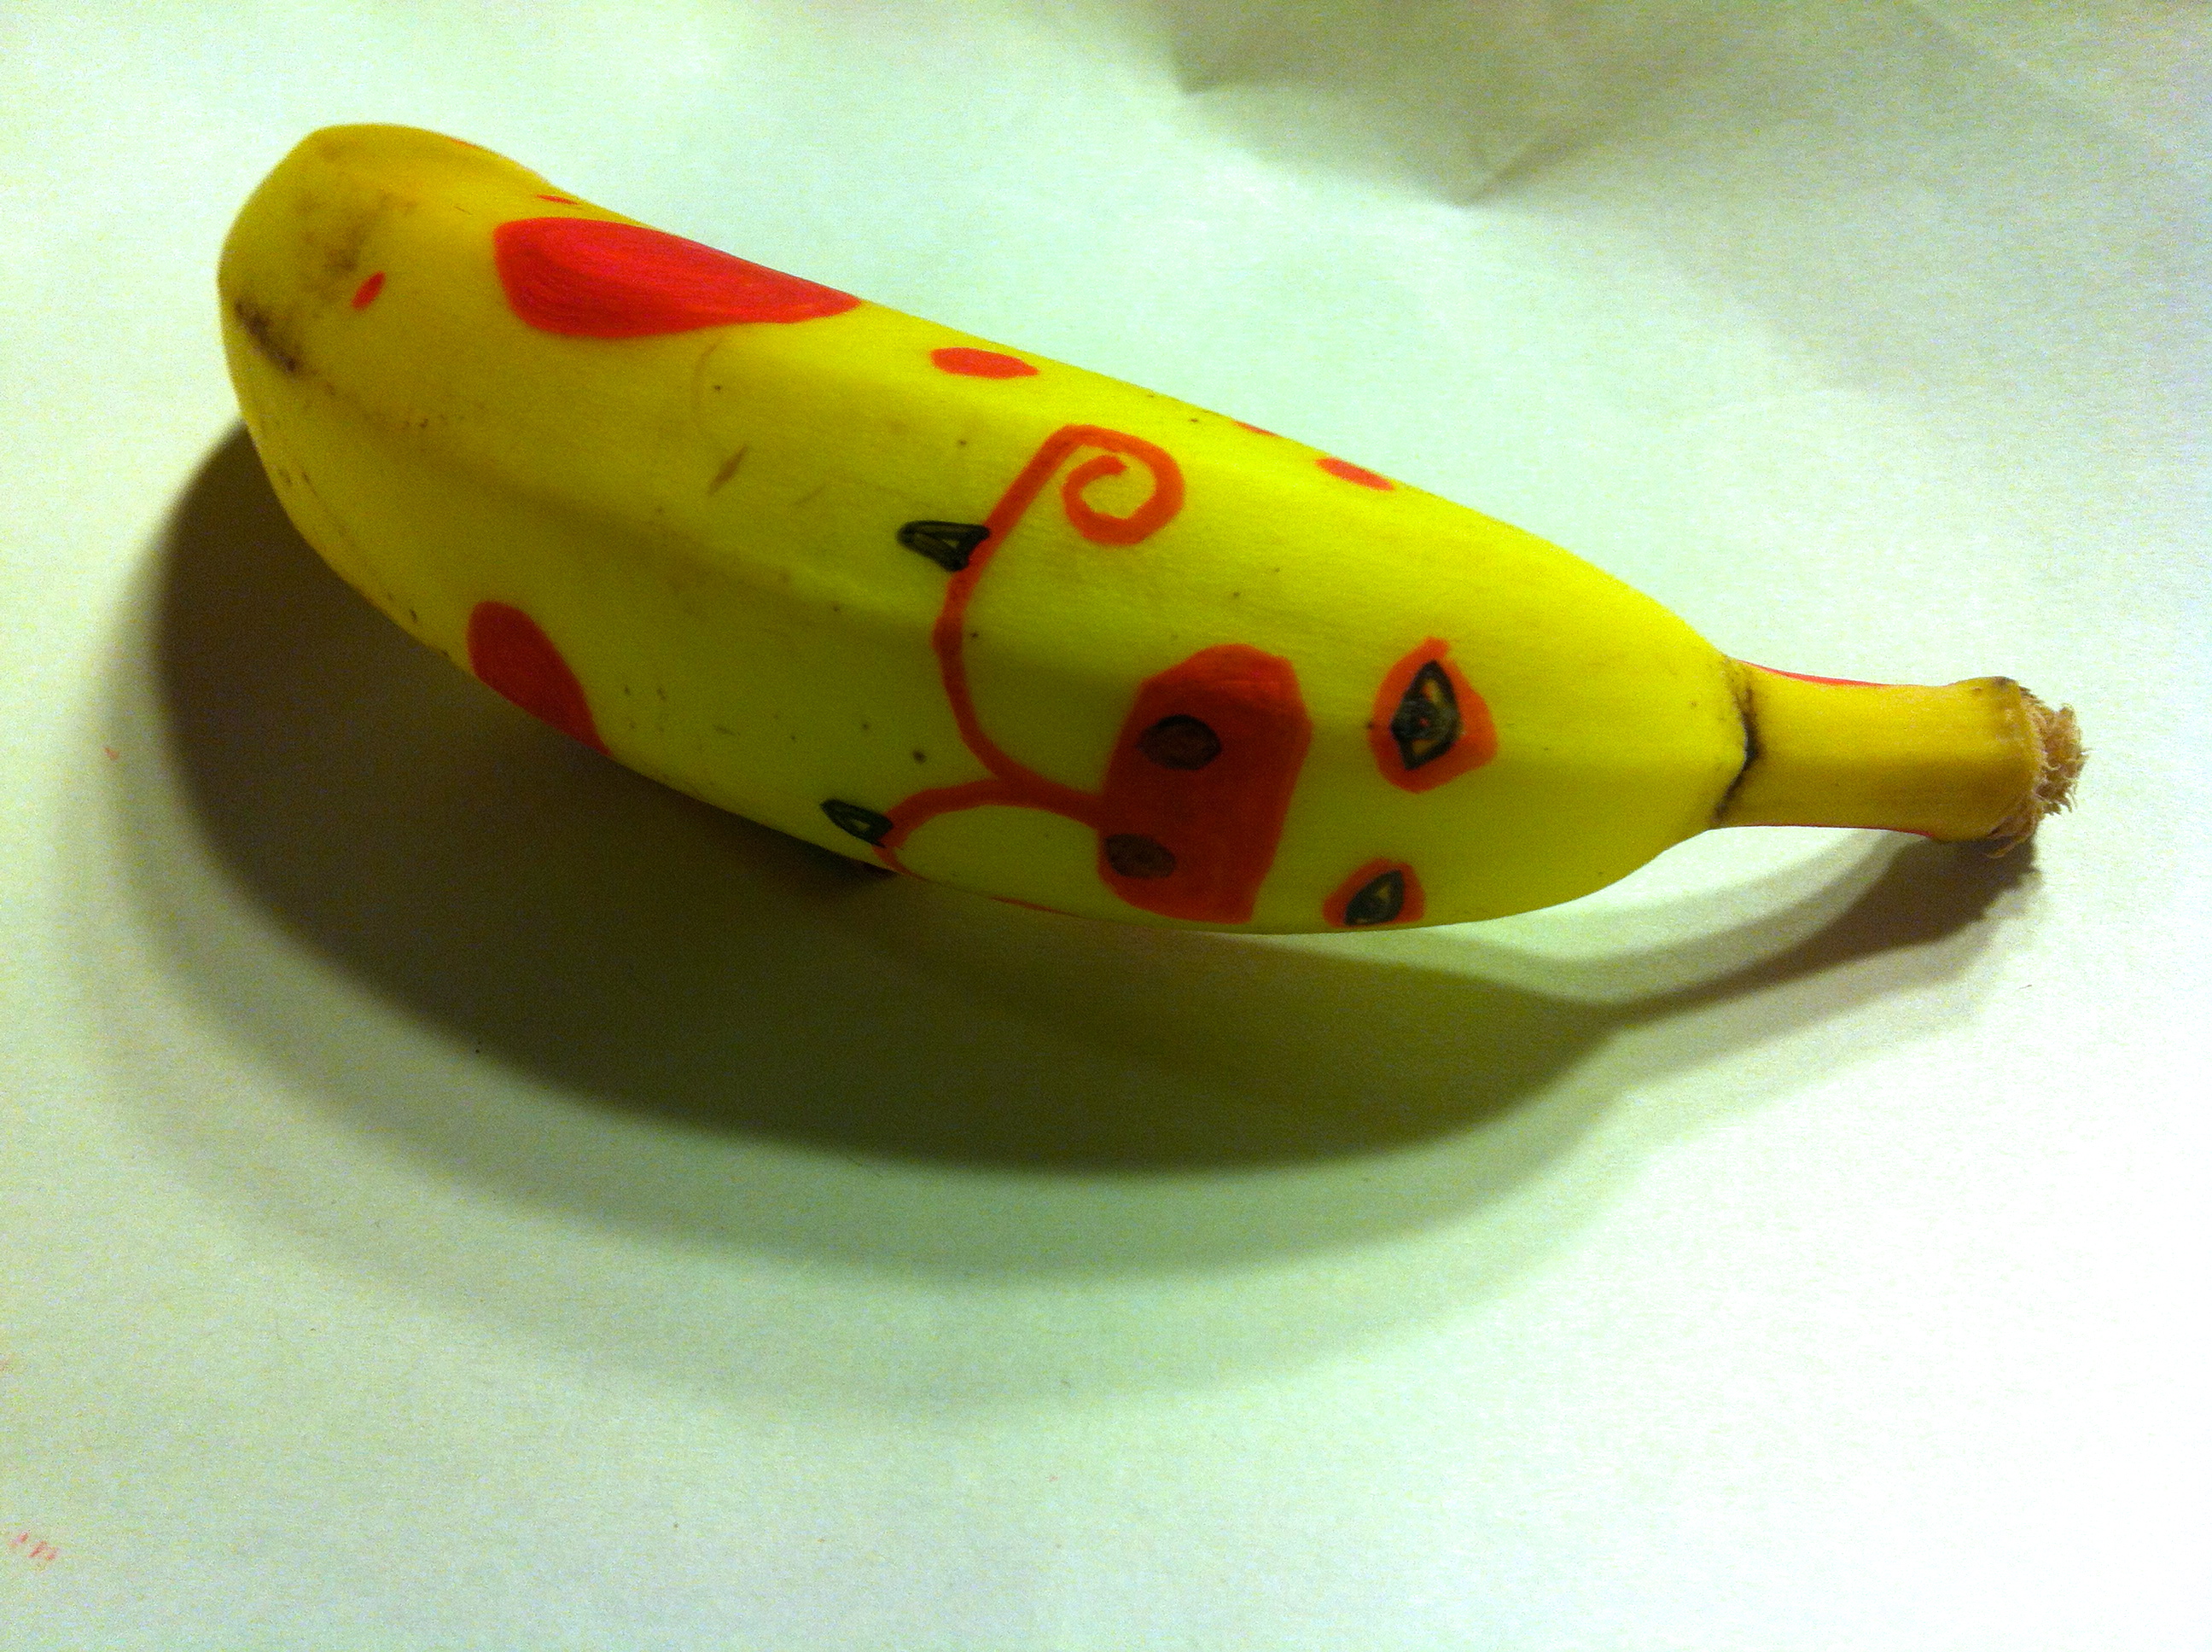 Painted banana, red spots on a yellow banana creates a cartoon leopard.